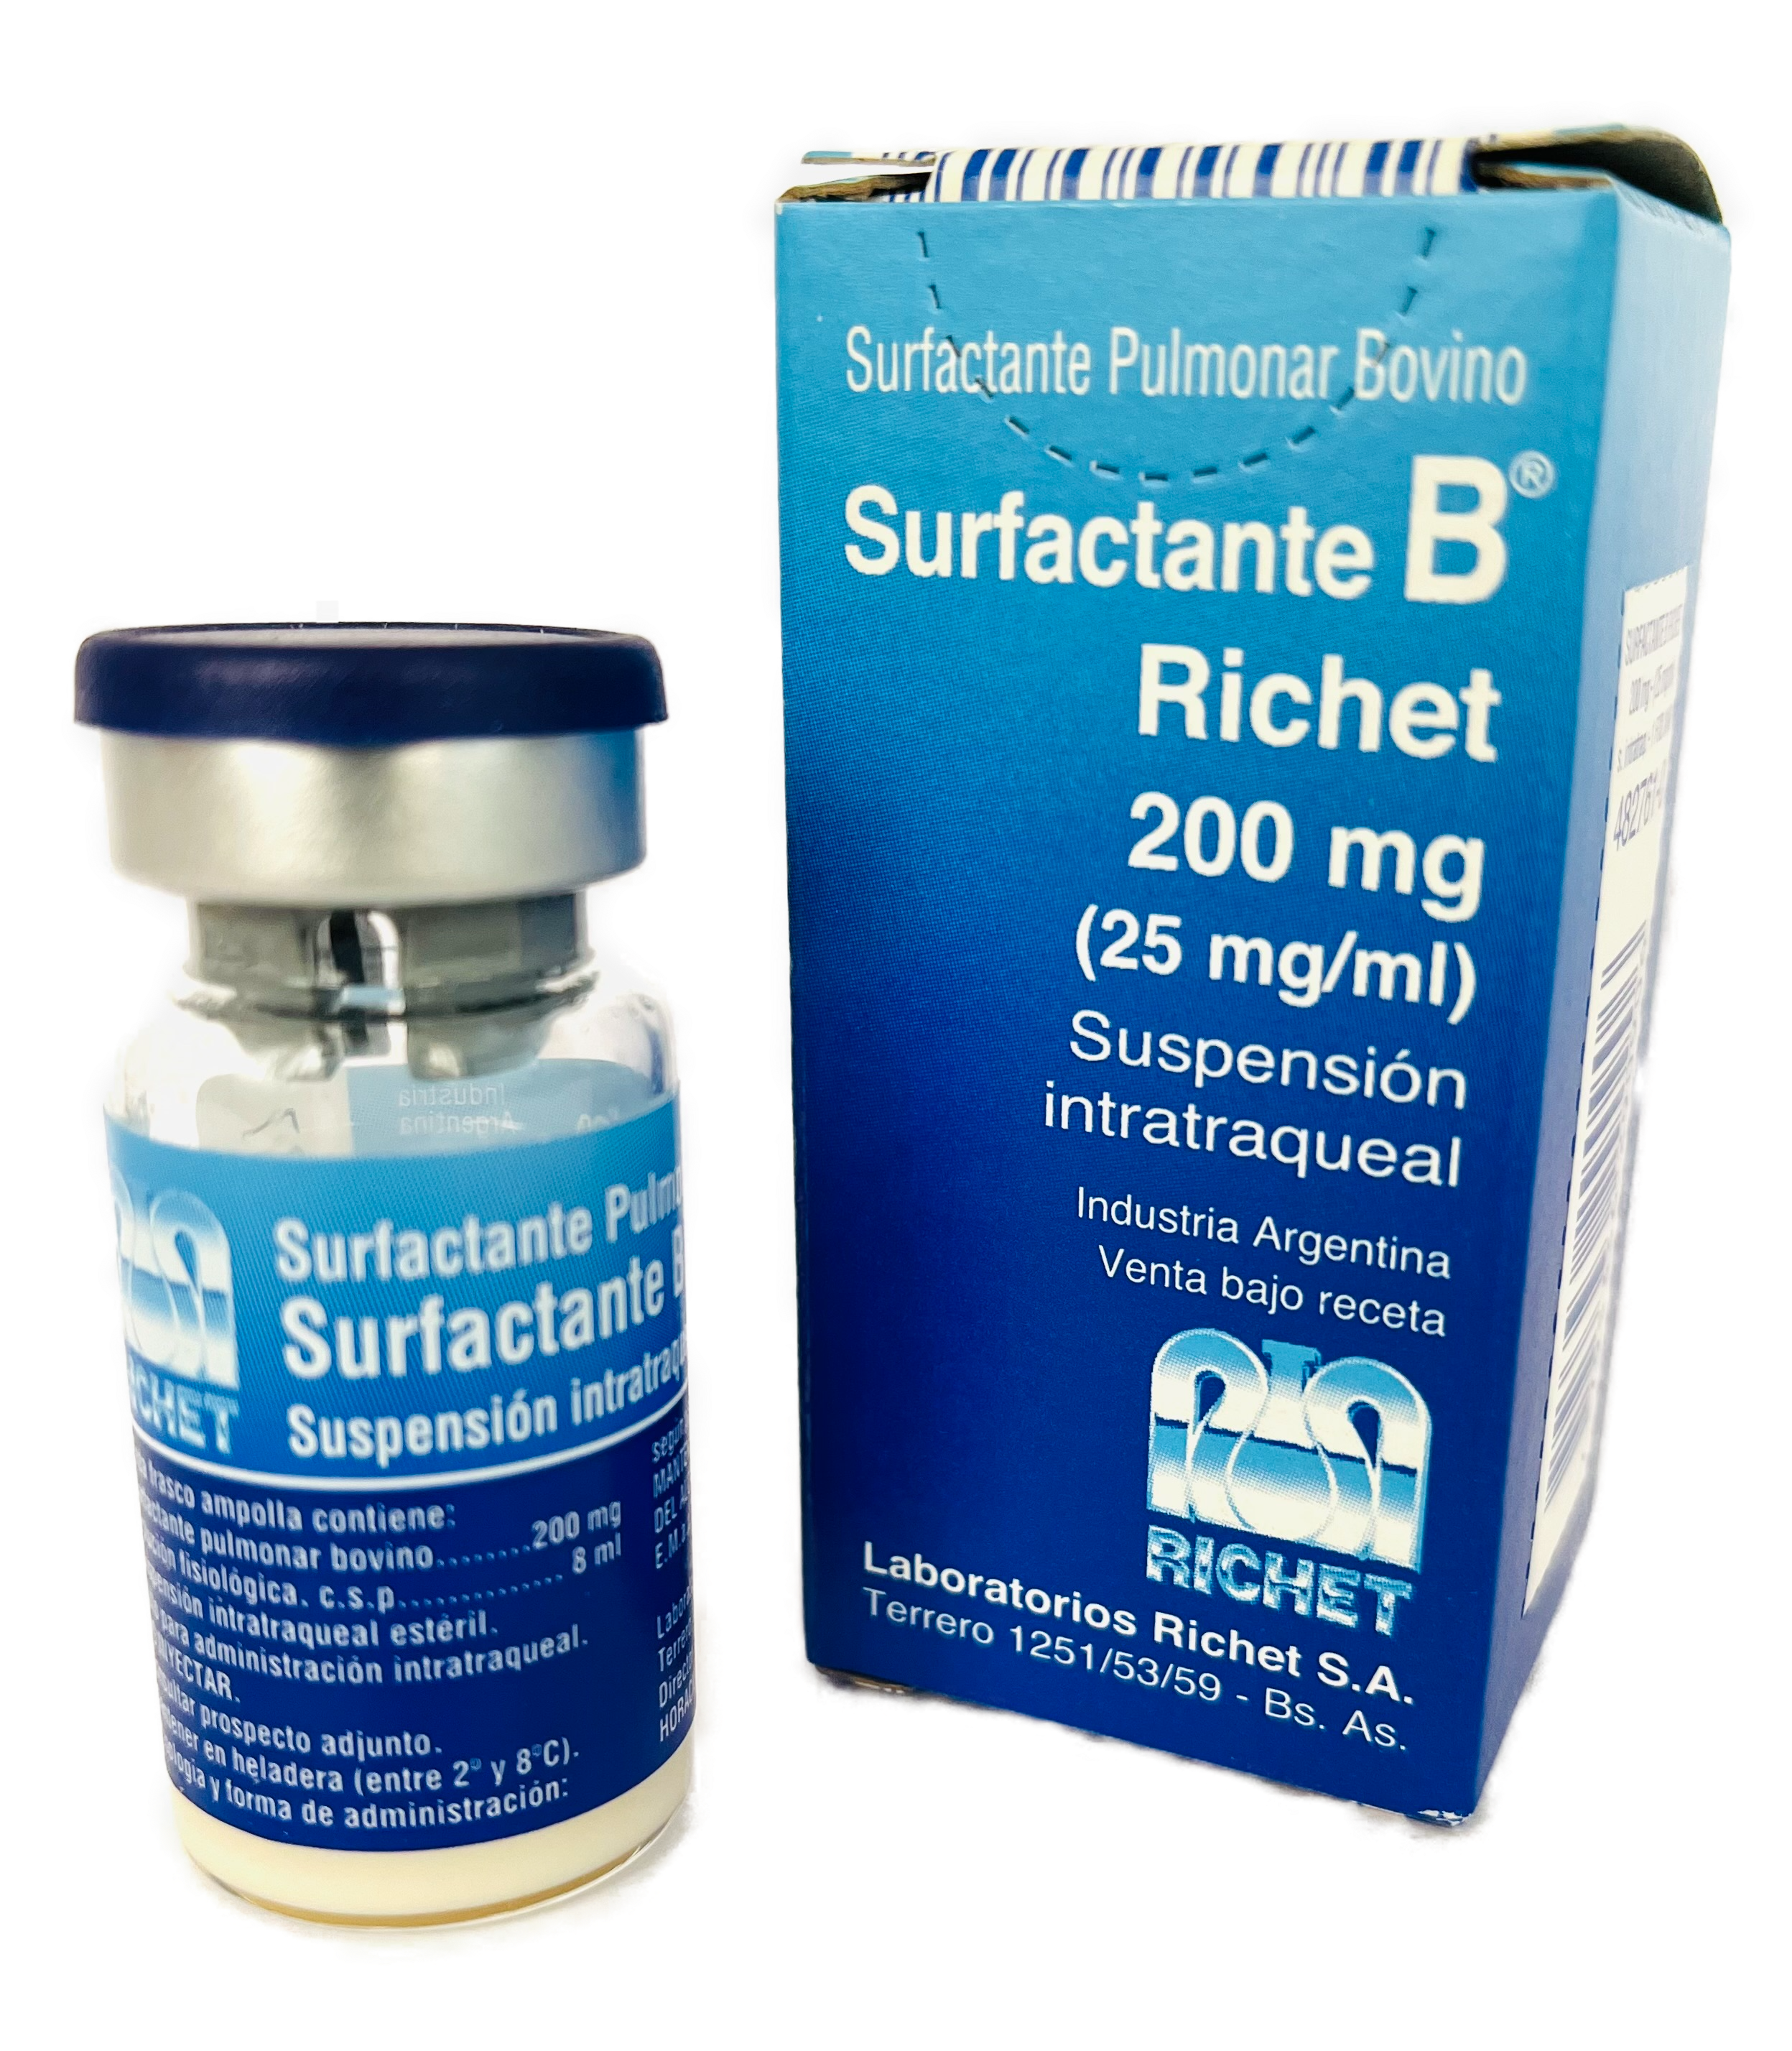 Surfactante B Richet 200 mg